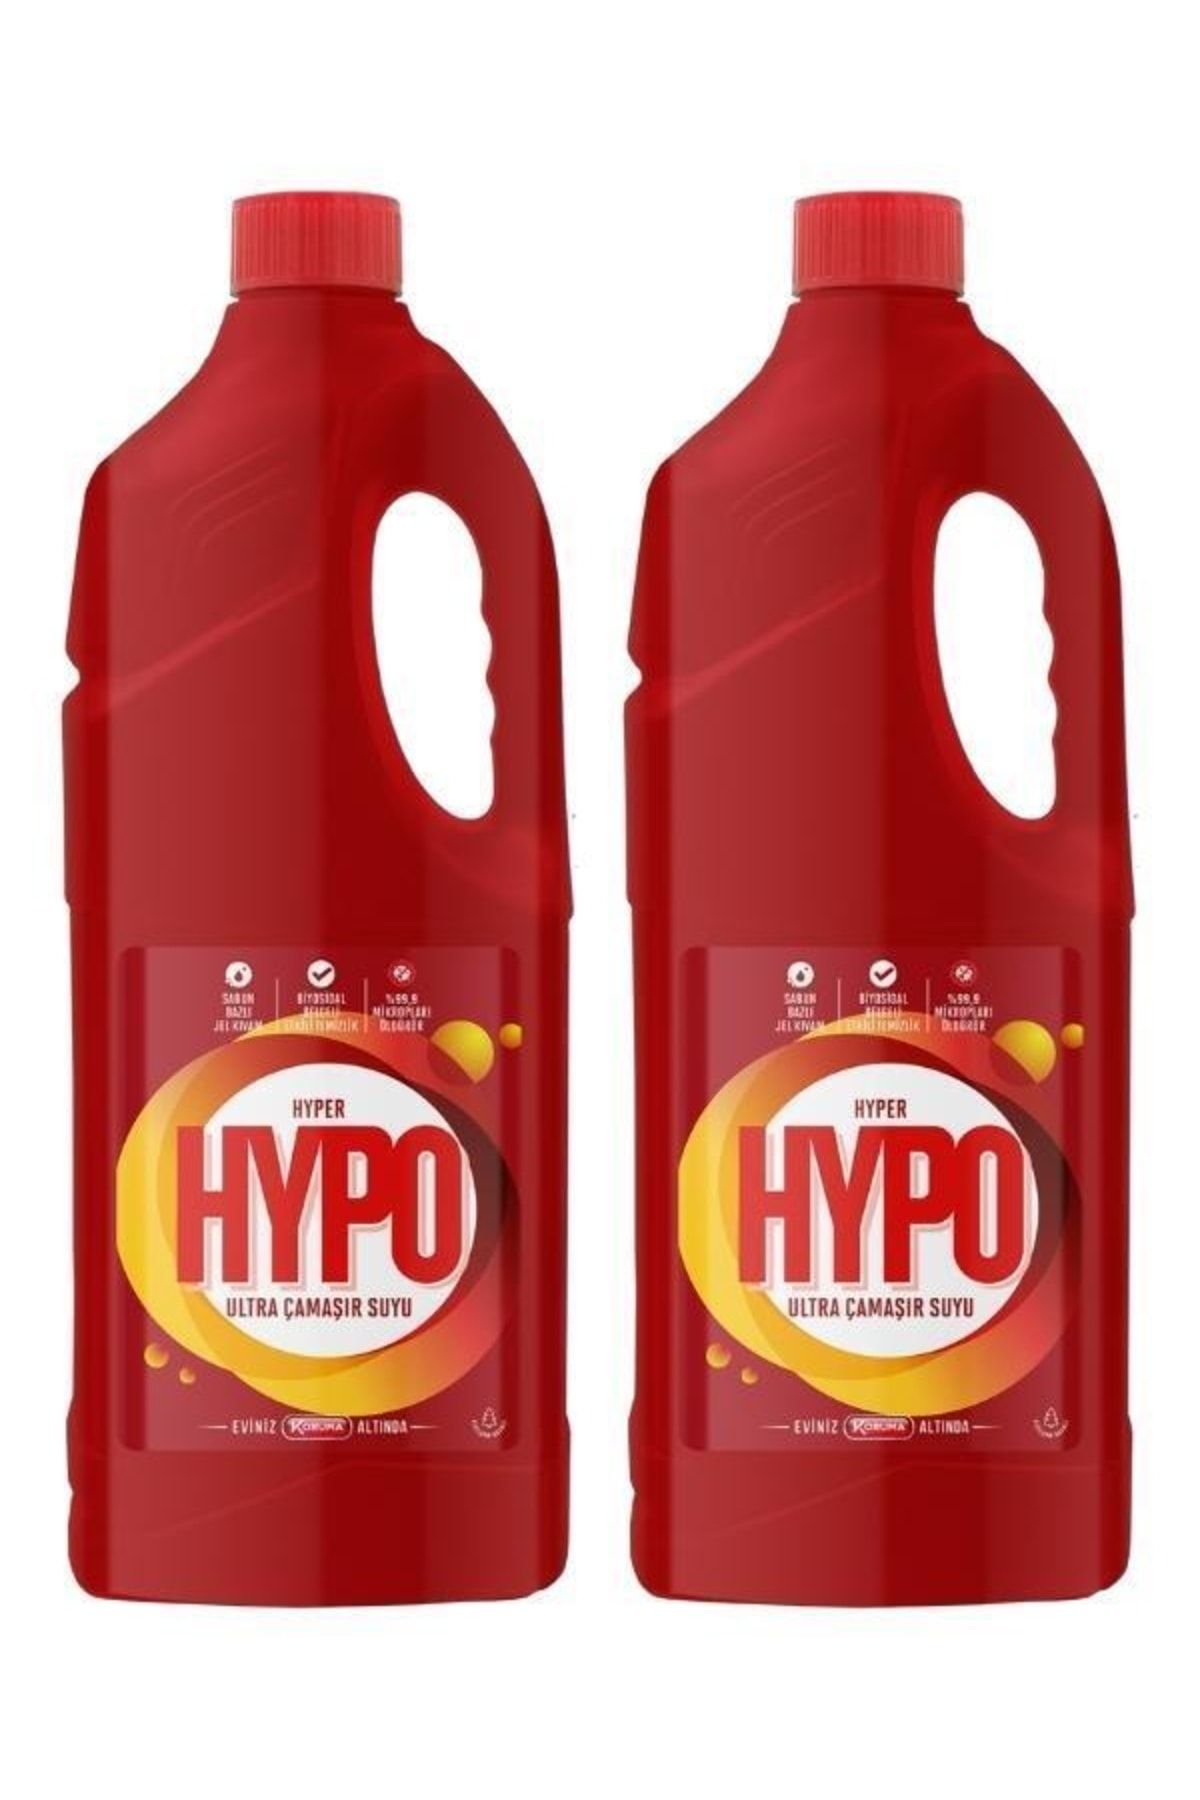 Hyper Hypo Çamaşır Suyu Kızılçam Esintisi 2 Adet 3 Kg